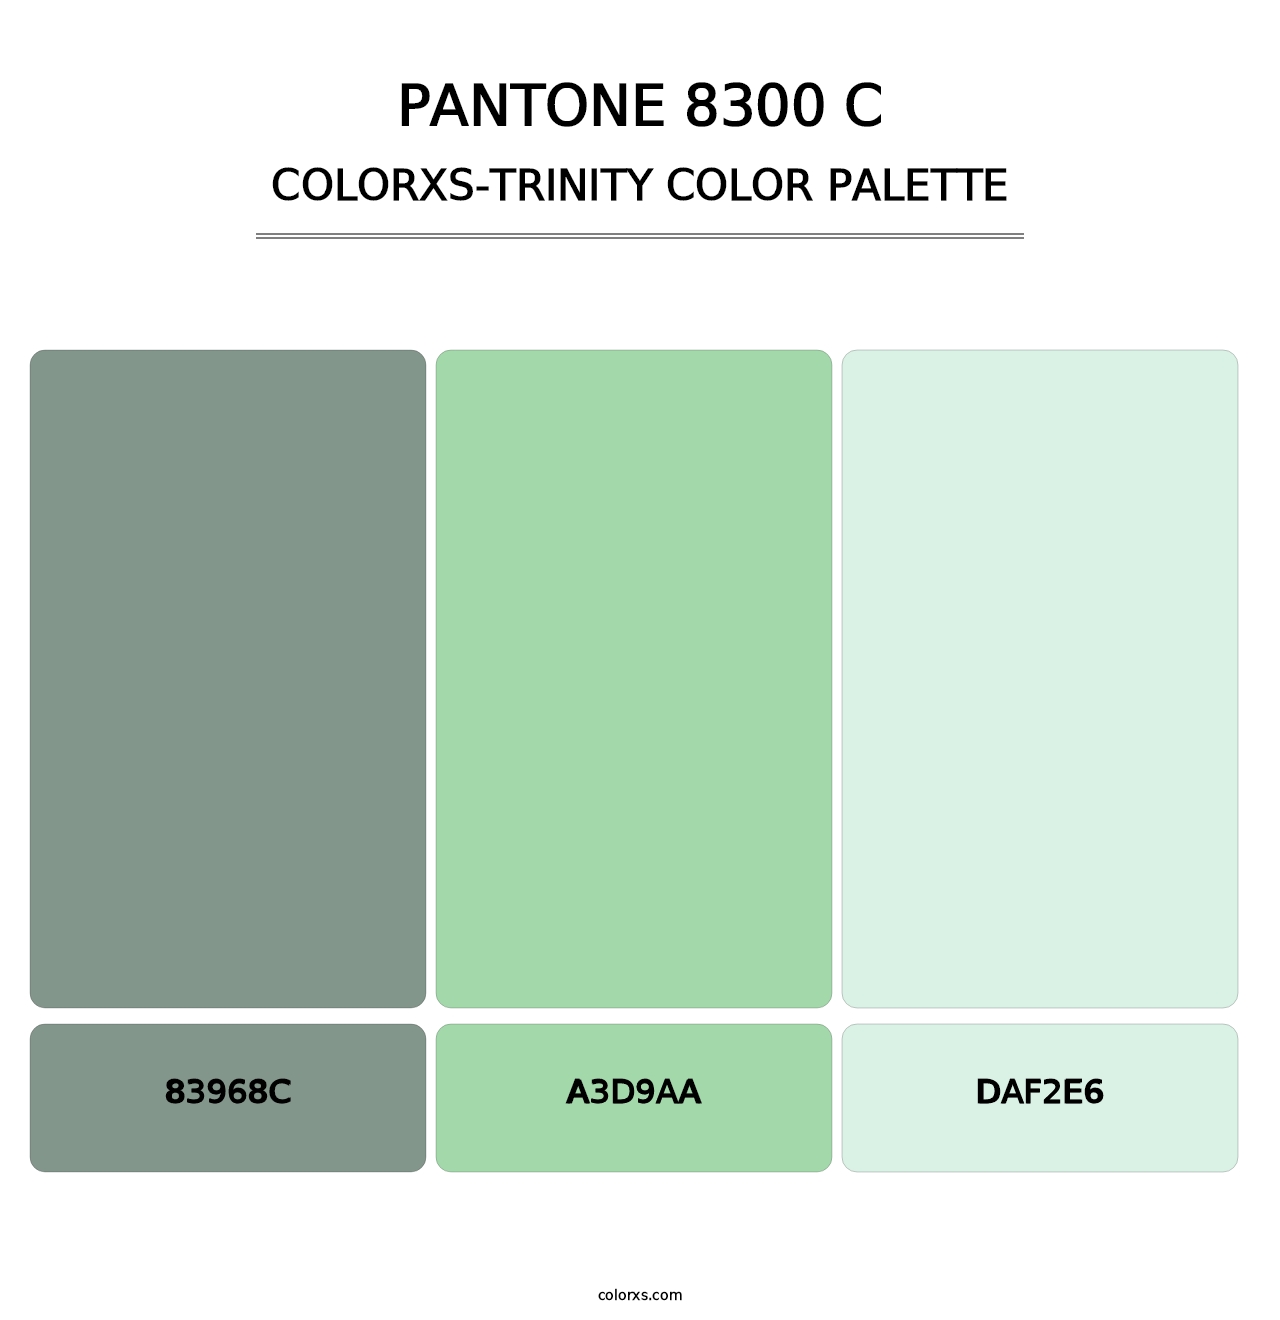 PANTONE 8300 C - Colorxs Trinity Palette